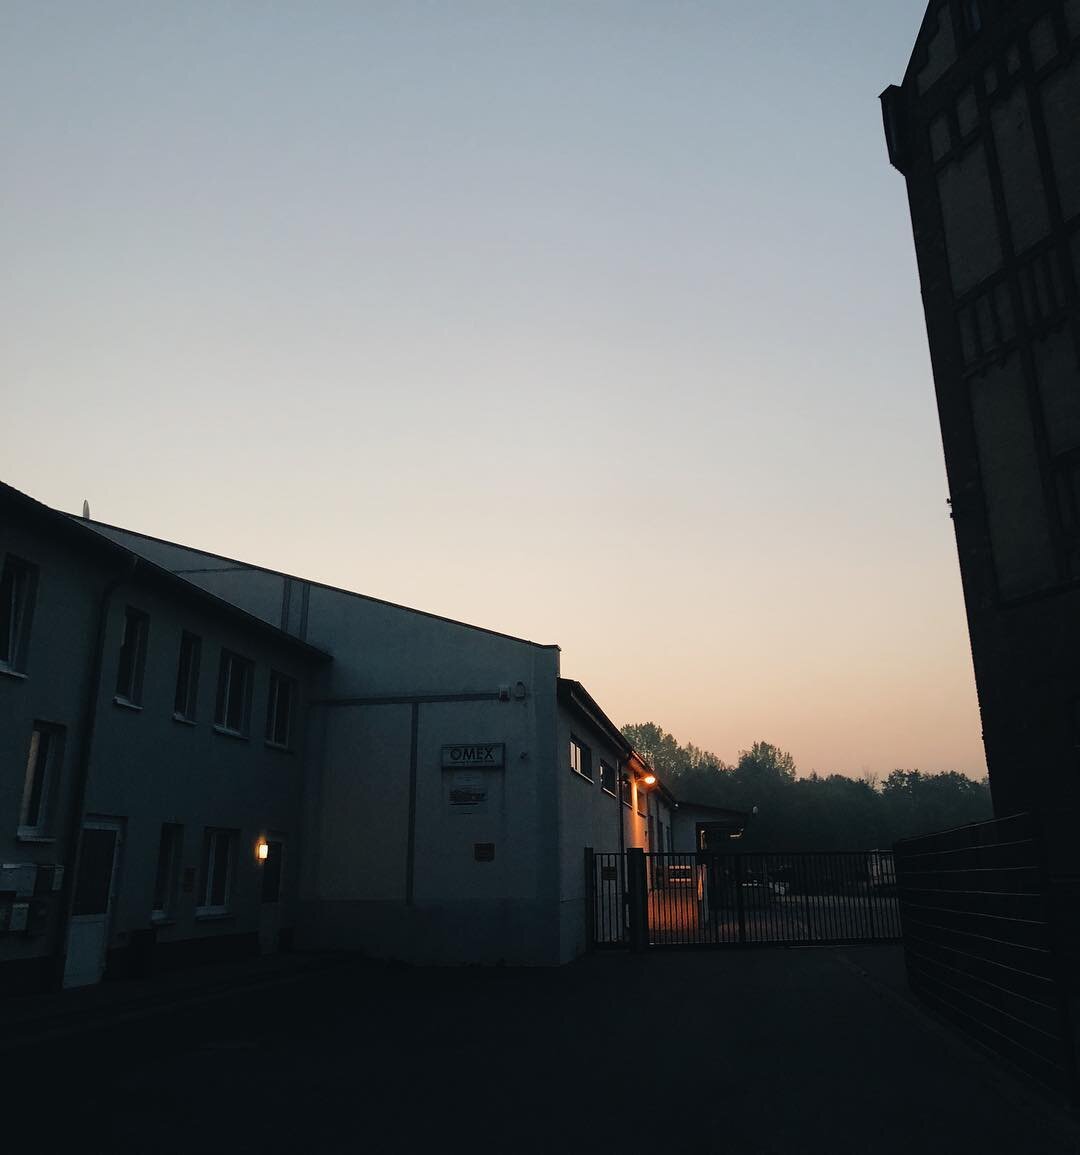 7:16am, berlin, oct.&rsquo;18⠀⠀⠀⠀⠀⠀⠀⠀⠀⠀⠀⠀⠀⠀⠀⠀⠀⠀⠀ ⠀⠀⠀⠀⠀⠀⠀⠀⠀⠀⠀⠀⠀⠀⠀⠀
_________________
⠀⠀⠀⠀⠀⠀⠀⠀⠀
#vsco #vscocam #iphoneonly #sunlight #berlin #sunrise #fujiframez #lightandshadow #sun #cinematography #filmmaking #filming #streetlight